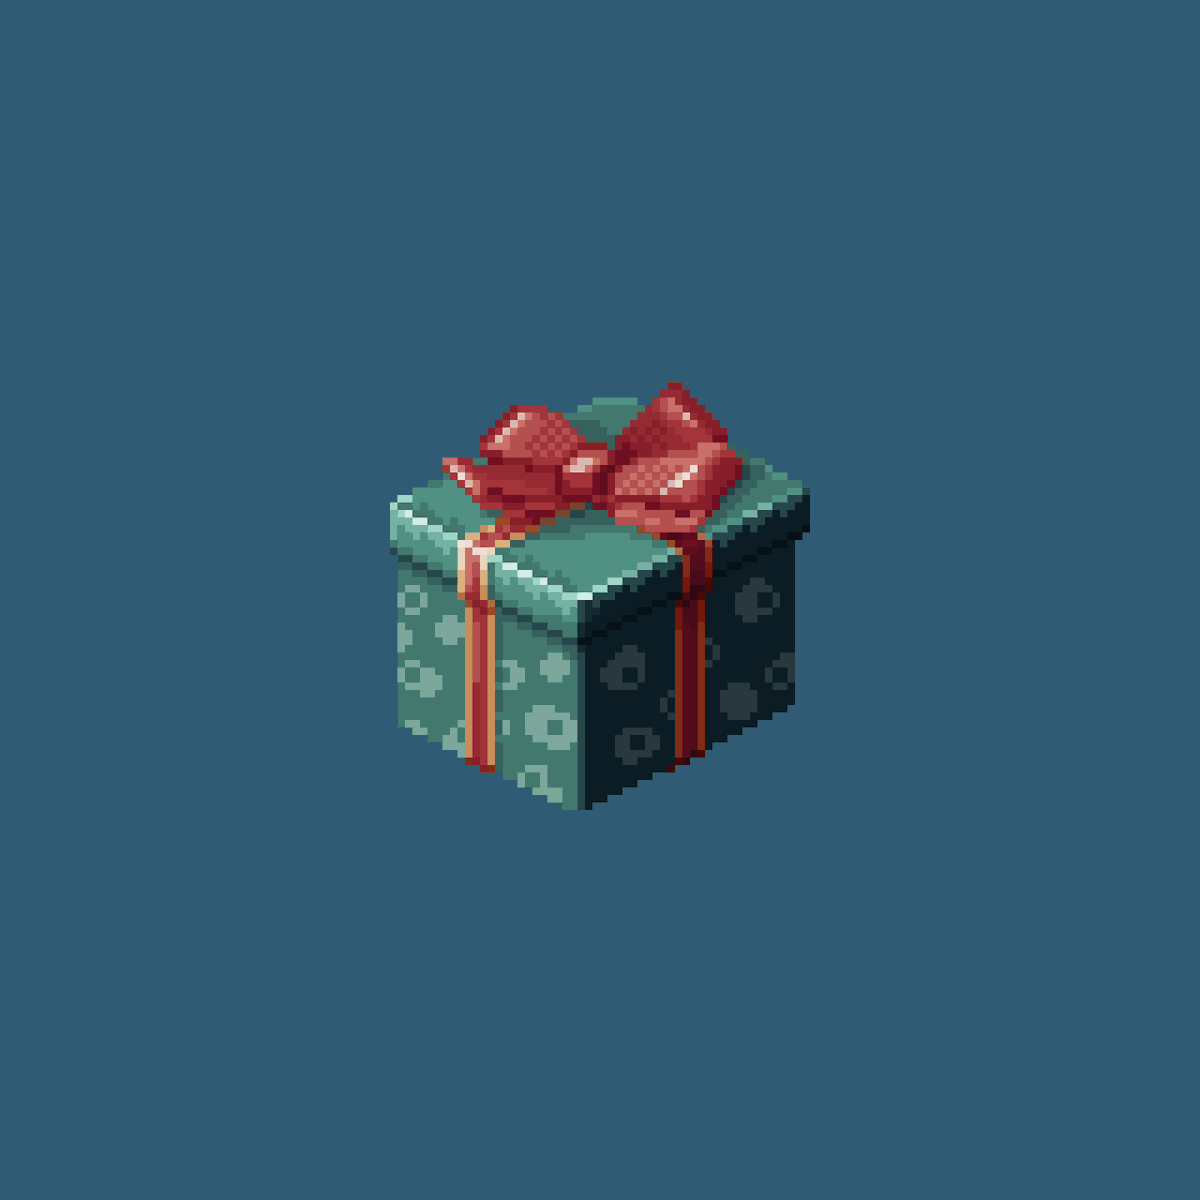 Christmas is not finish! Here another bonus gift!
@PixelArtJourney for #WeeklyChallenge #ChristmasGift #pixelart